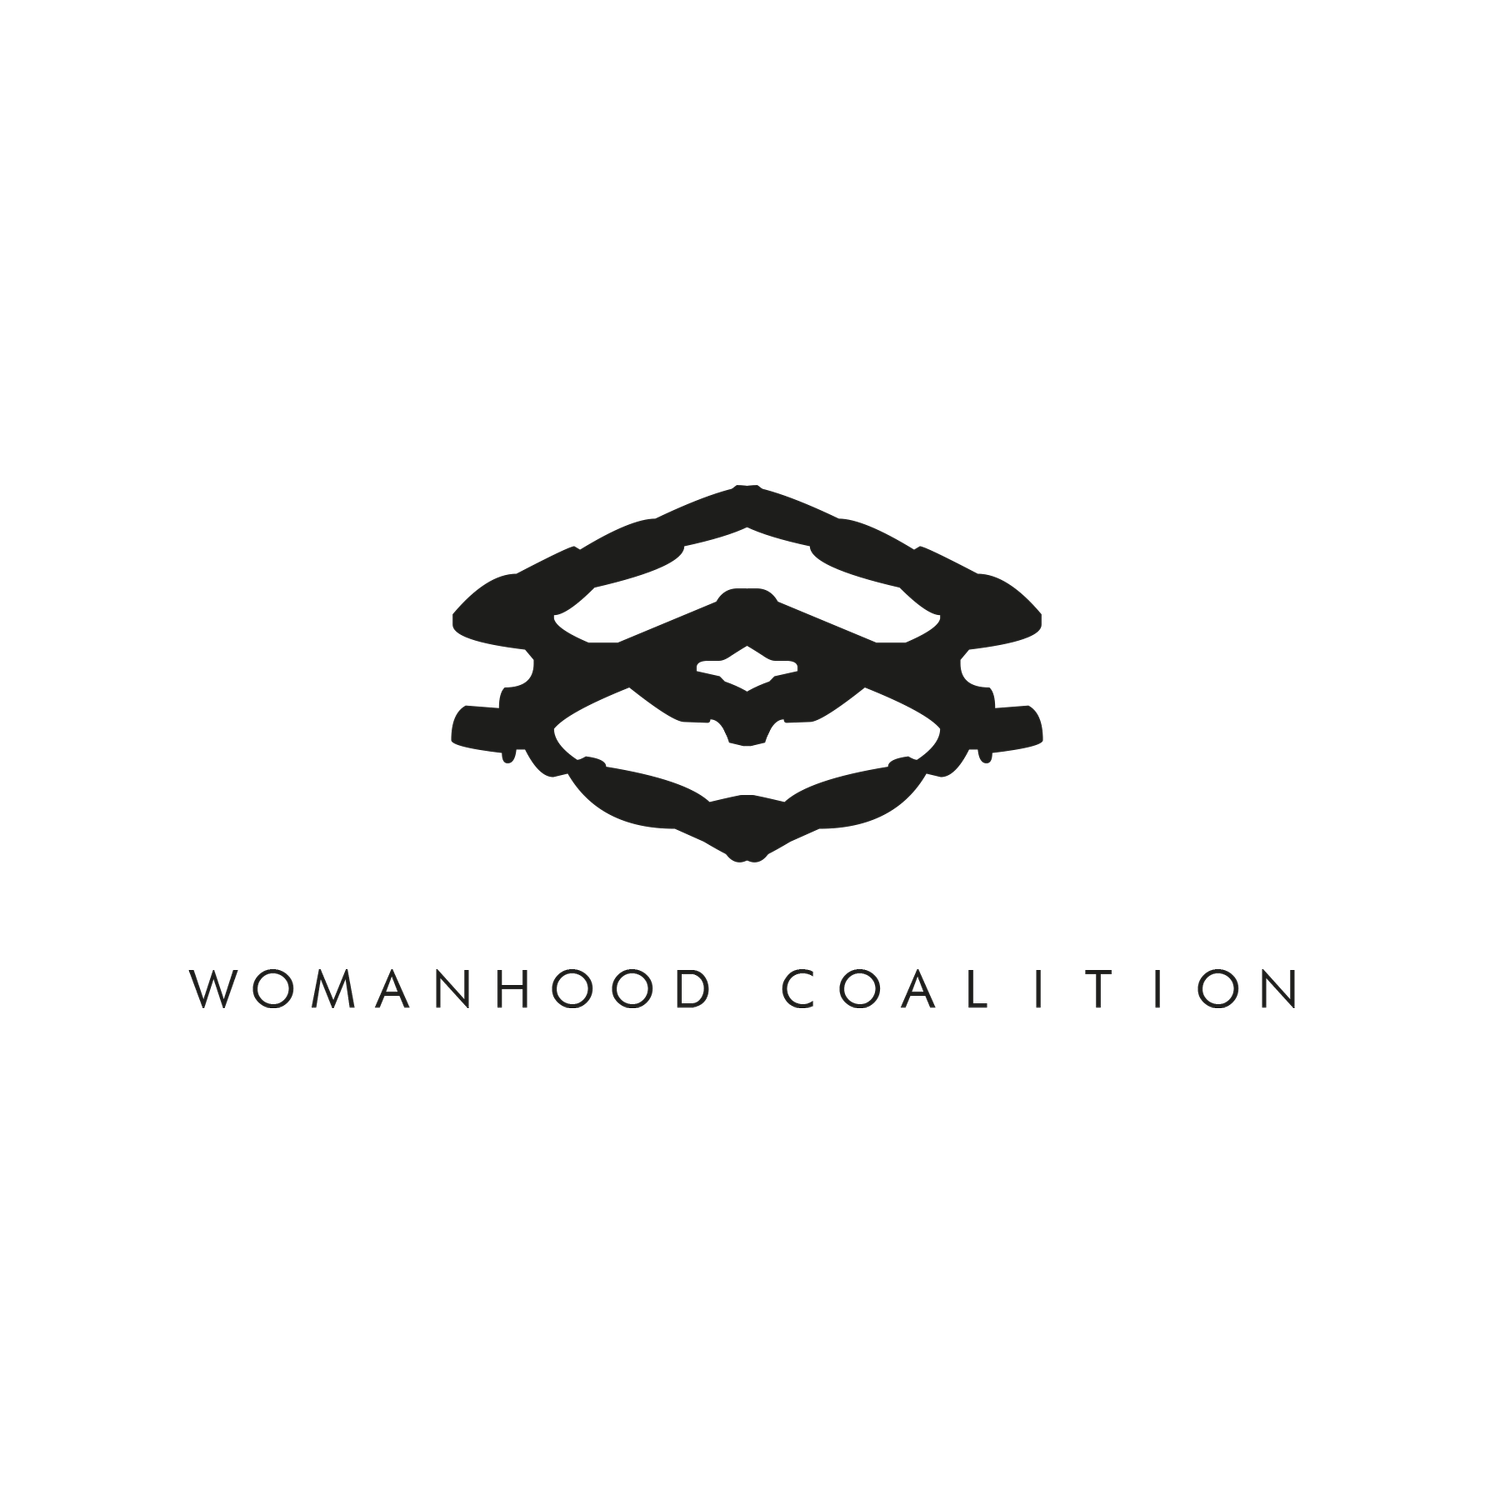 Womanhood Coalition